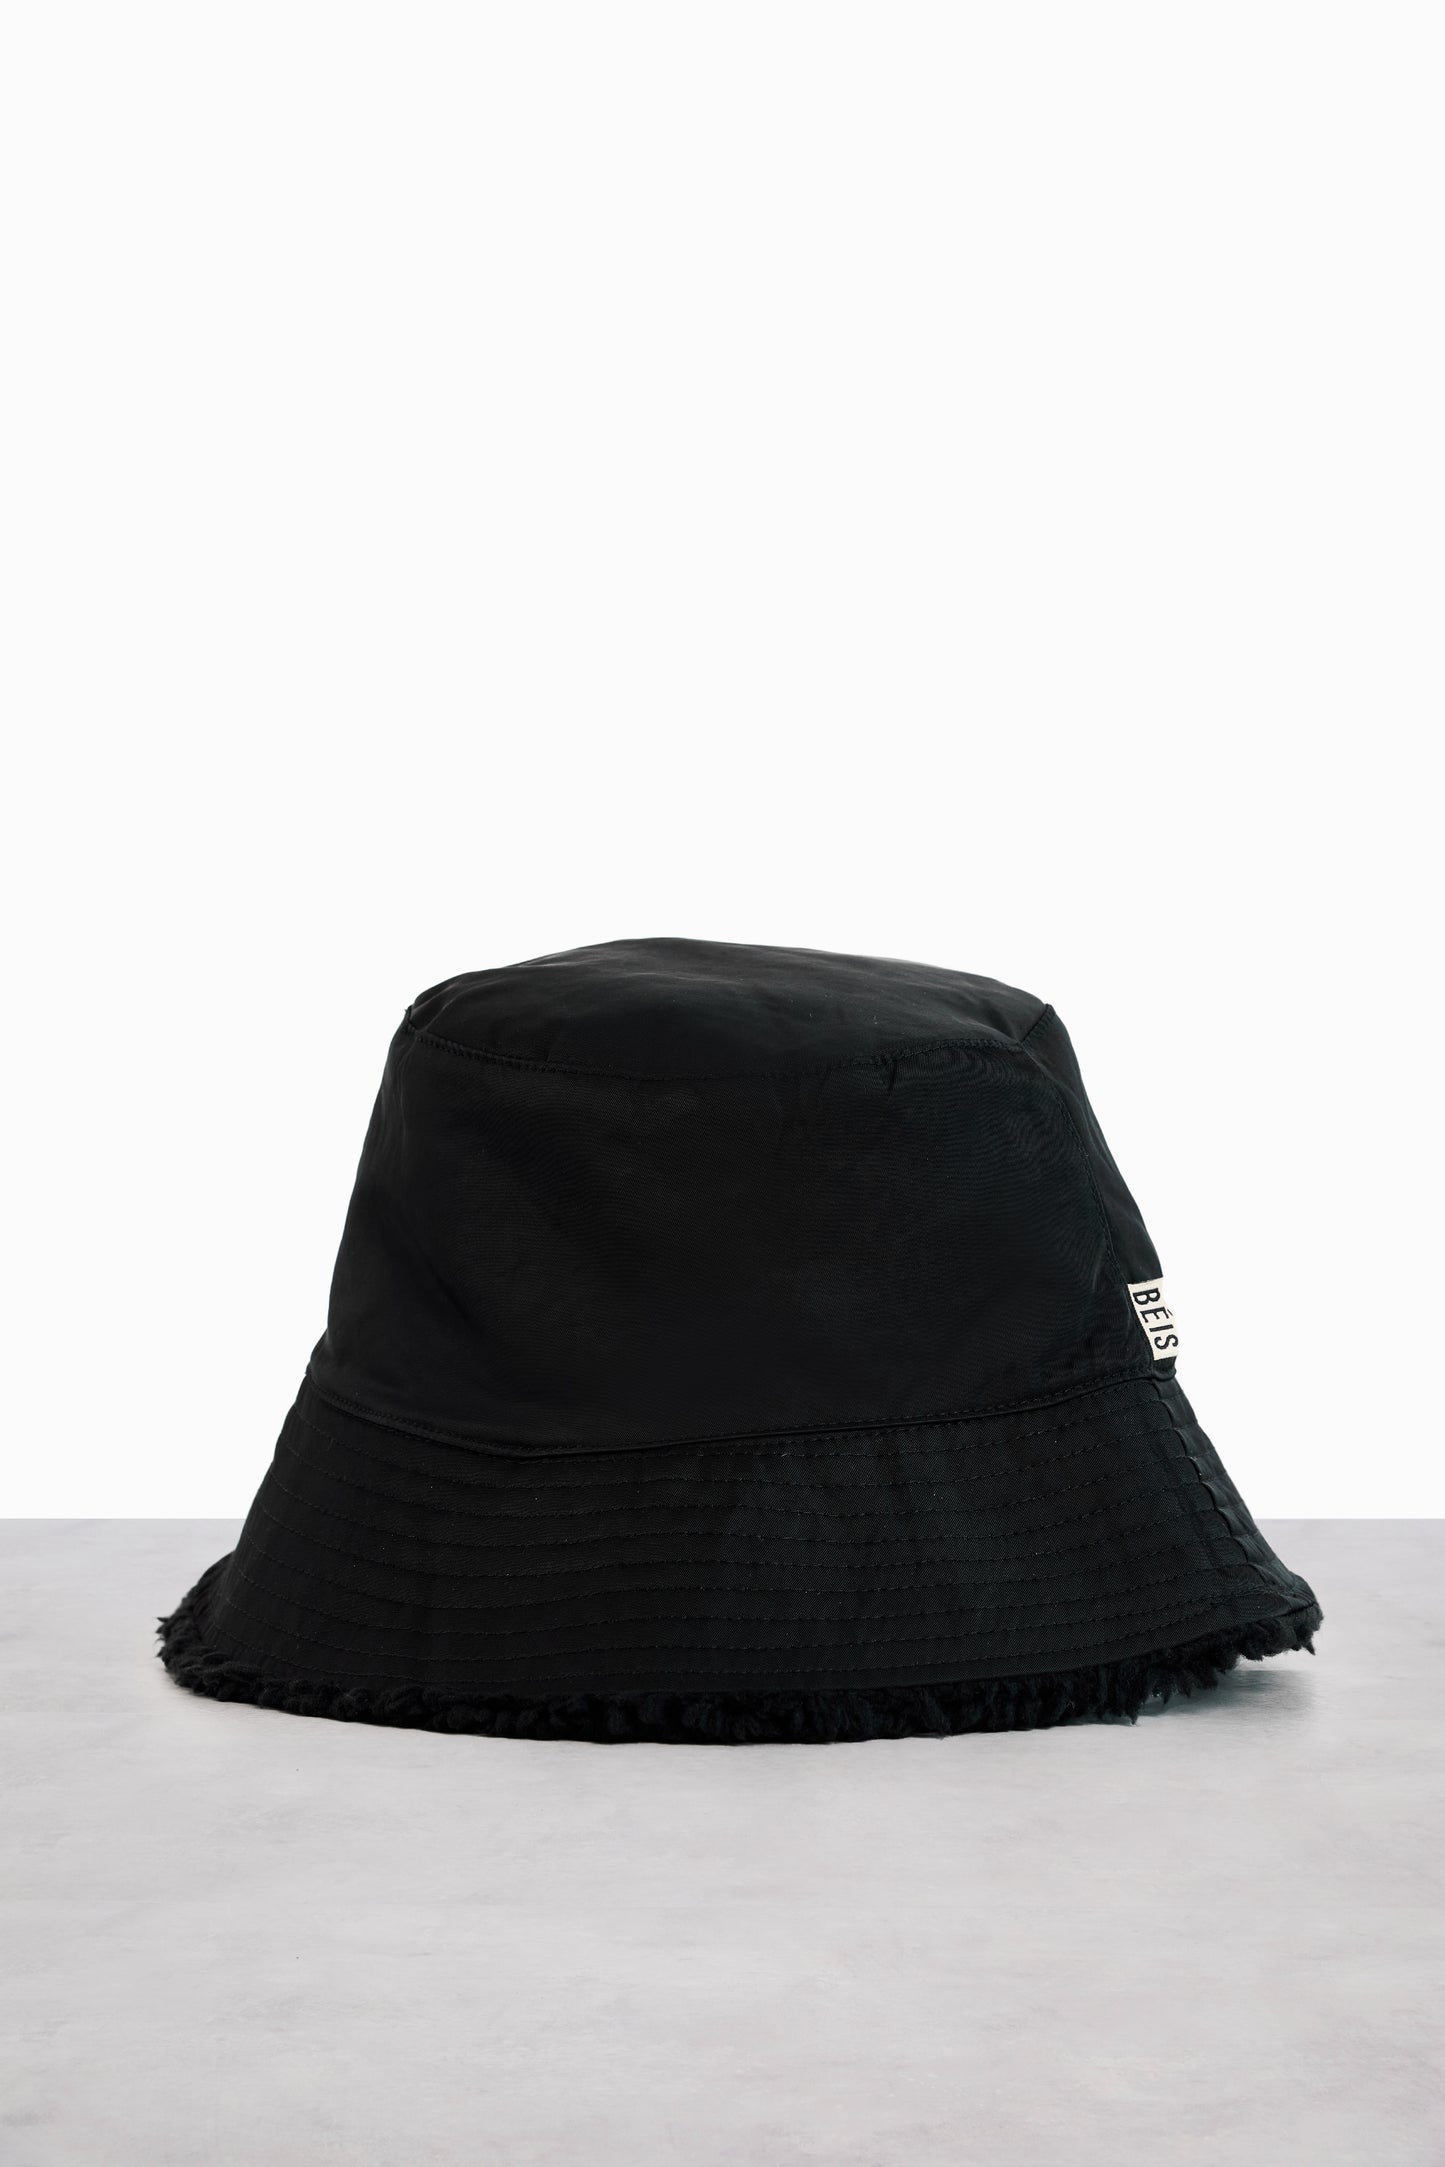 The Bucket Hat in Black